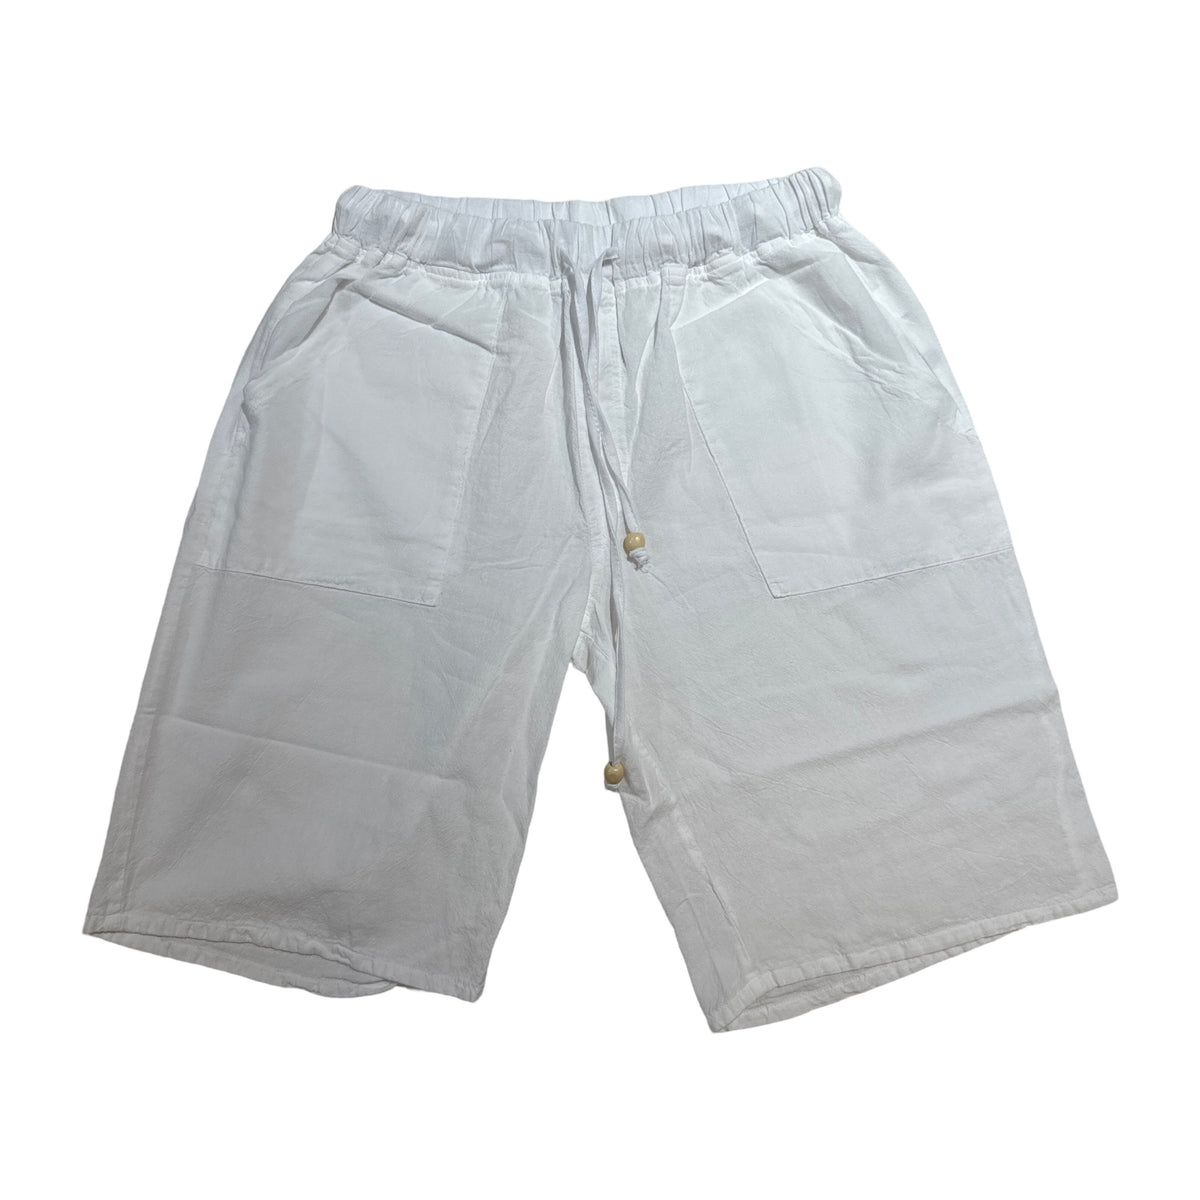 Seaspice White Double Pocket Peruvian Cotton Shorts